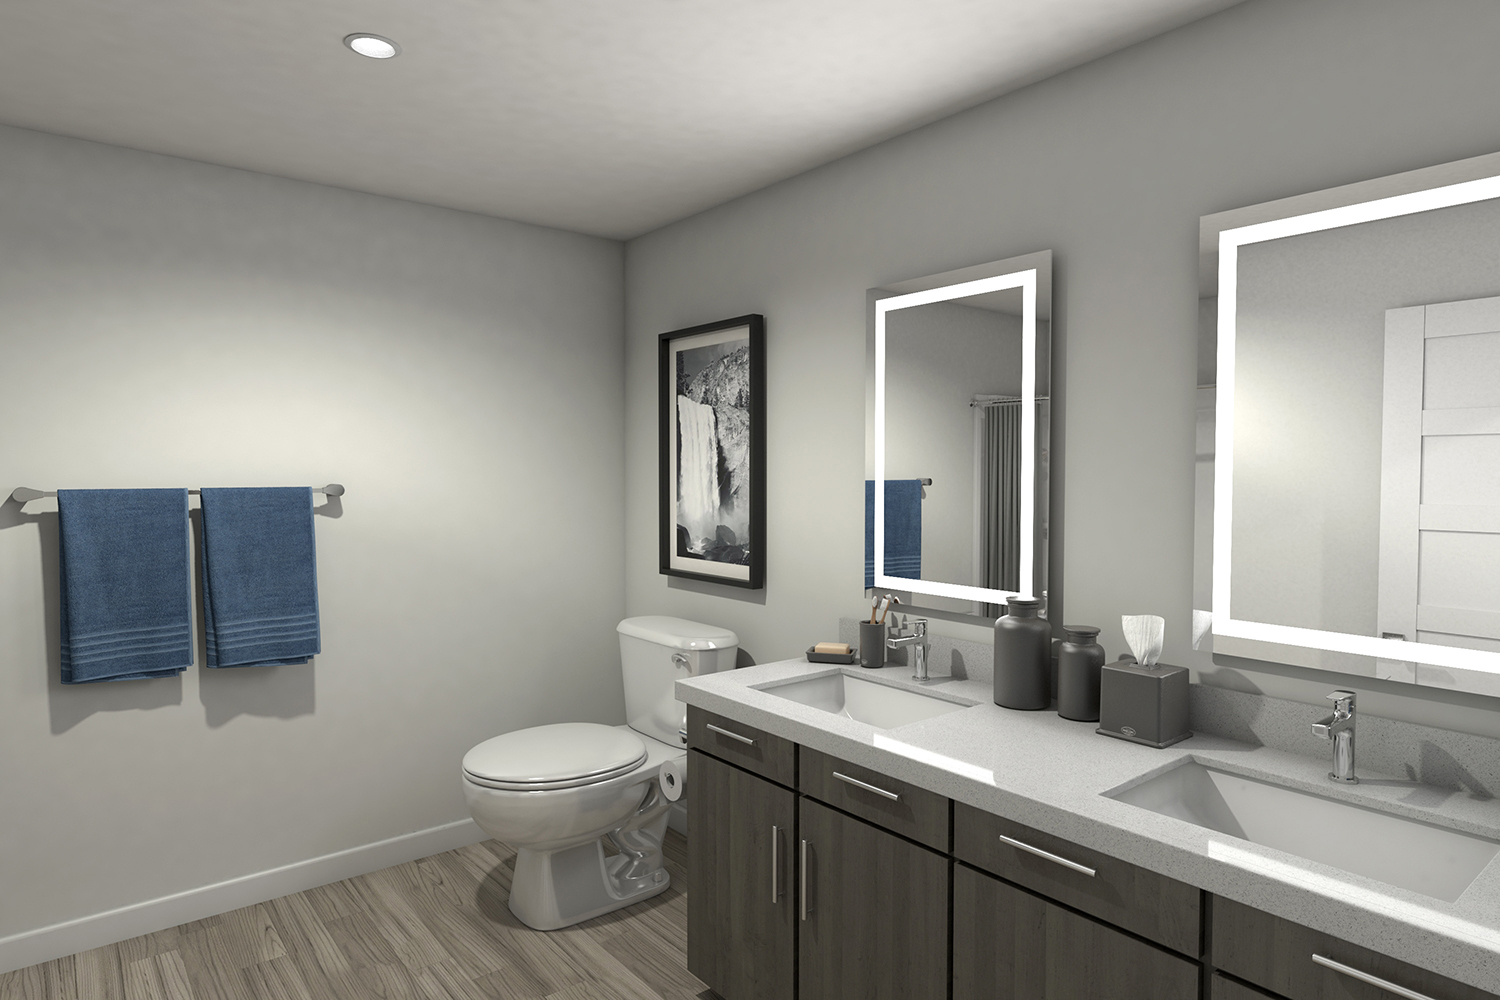 The Overlook at Keystone Canyon Apartments - Reno NV - Three Bedroom - Guest Bathroom